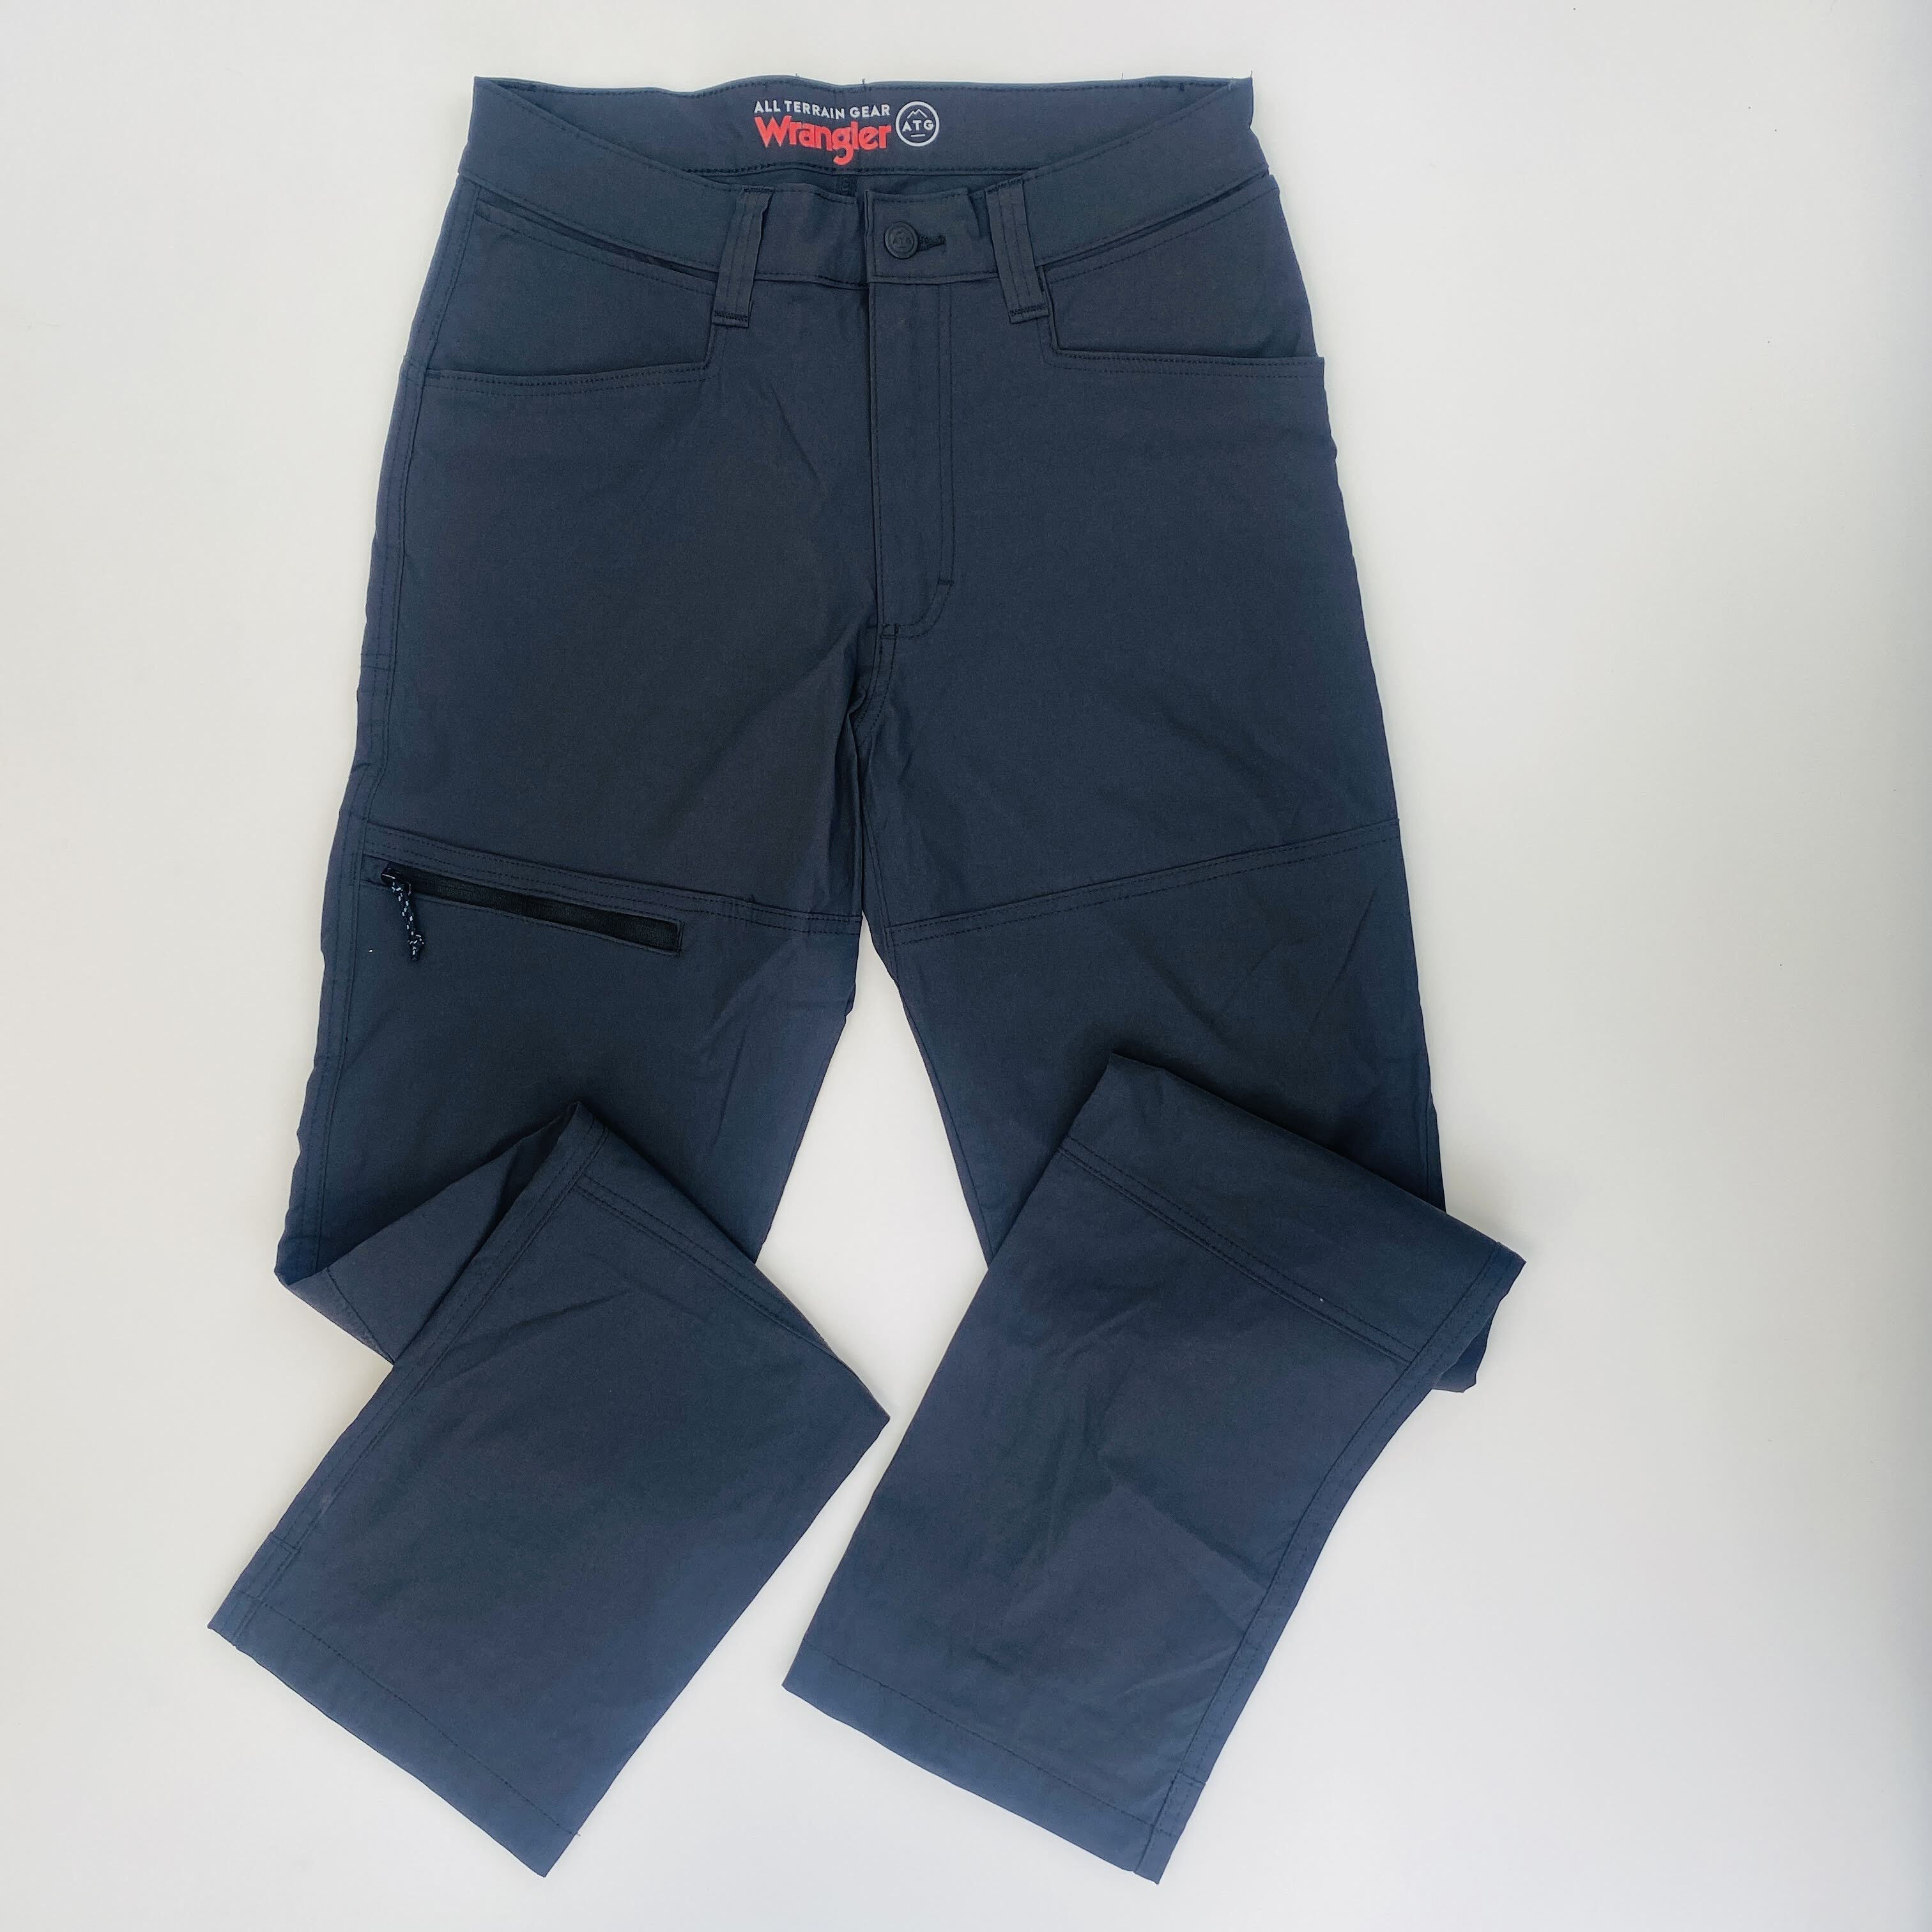 Wrangler Sustainable Zip Pkt - Seconde main Pantalon randonnée homme - Noir - 44 | Hardloop